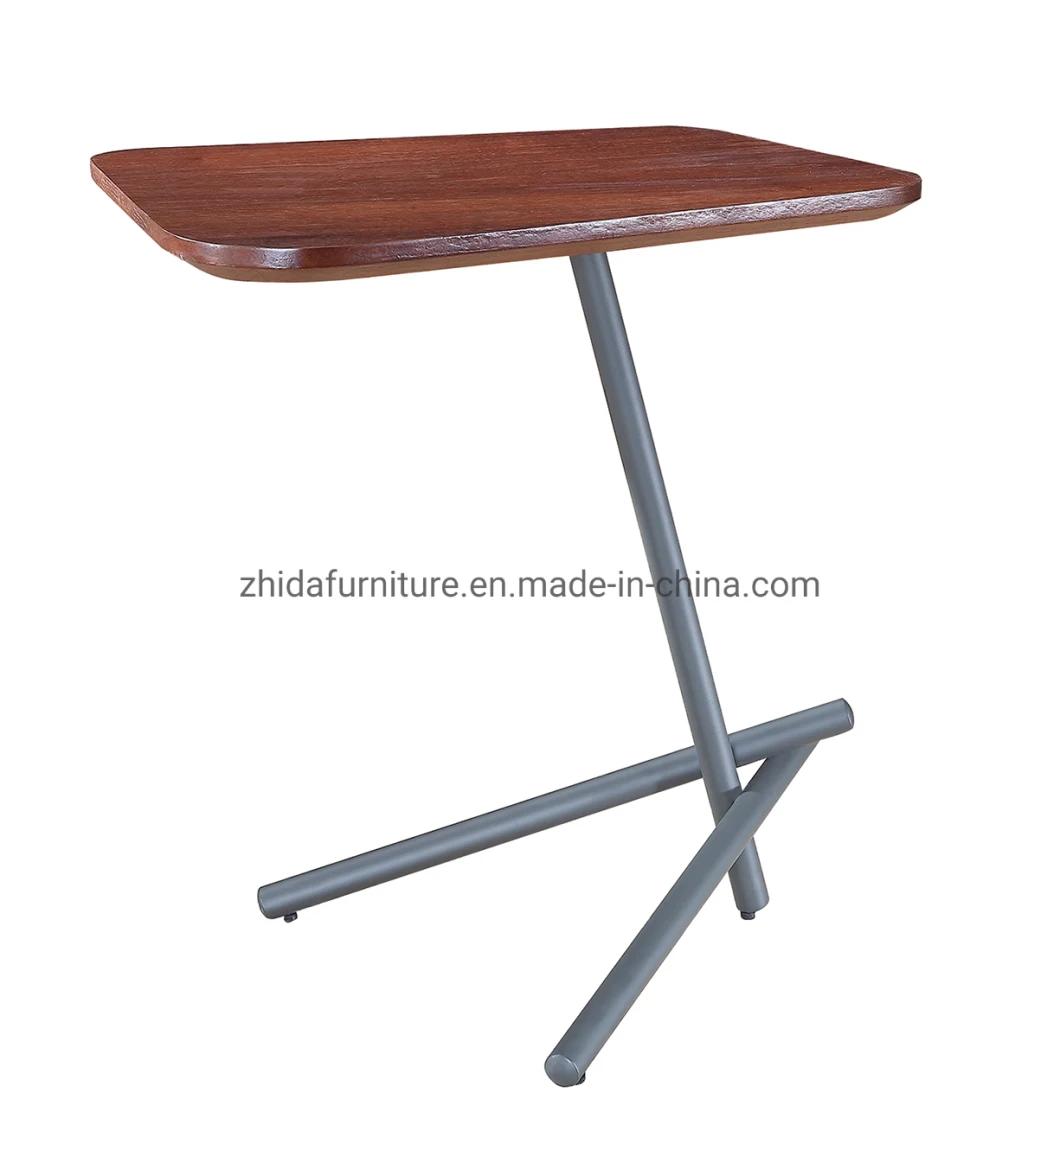 Bedroom Furniture Modern Design Metal Base Wooden Top Coffee Table